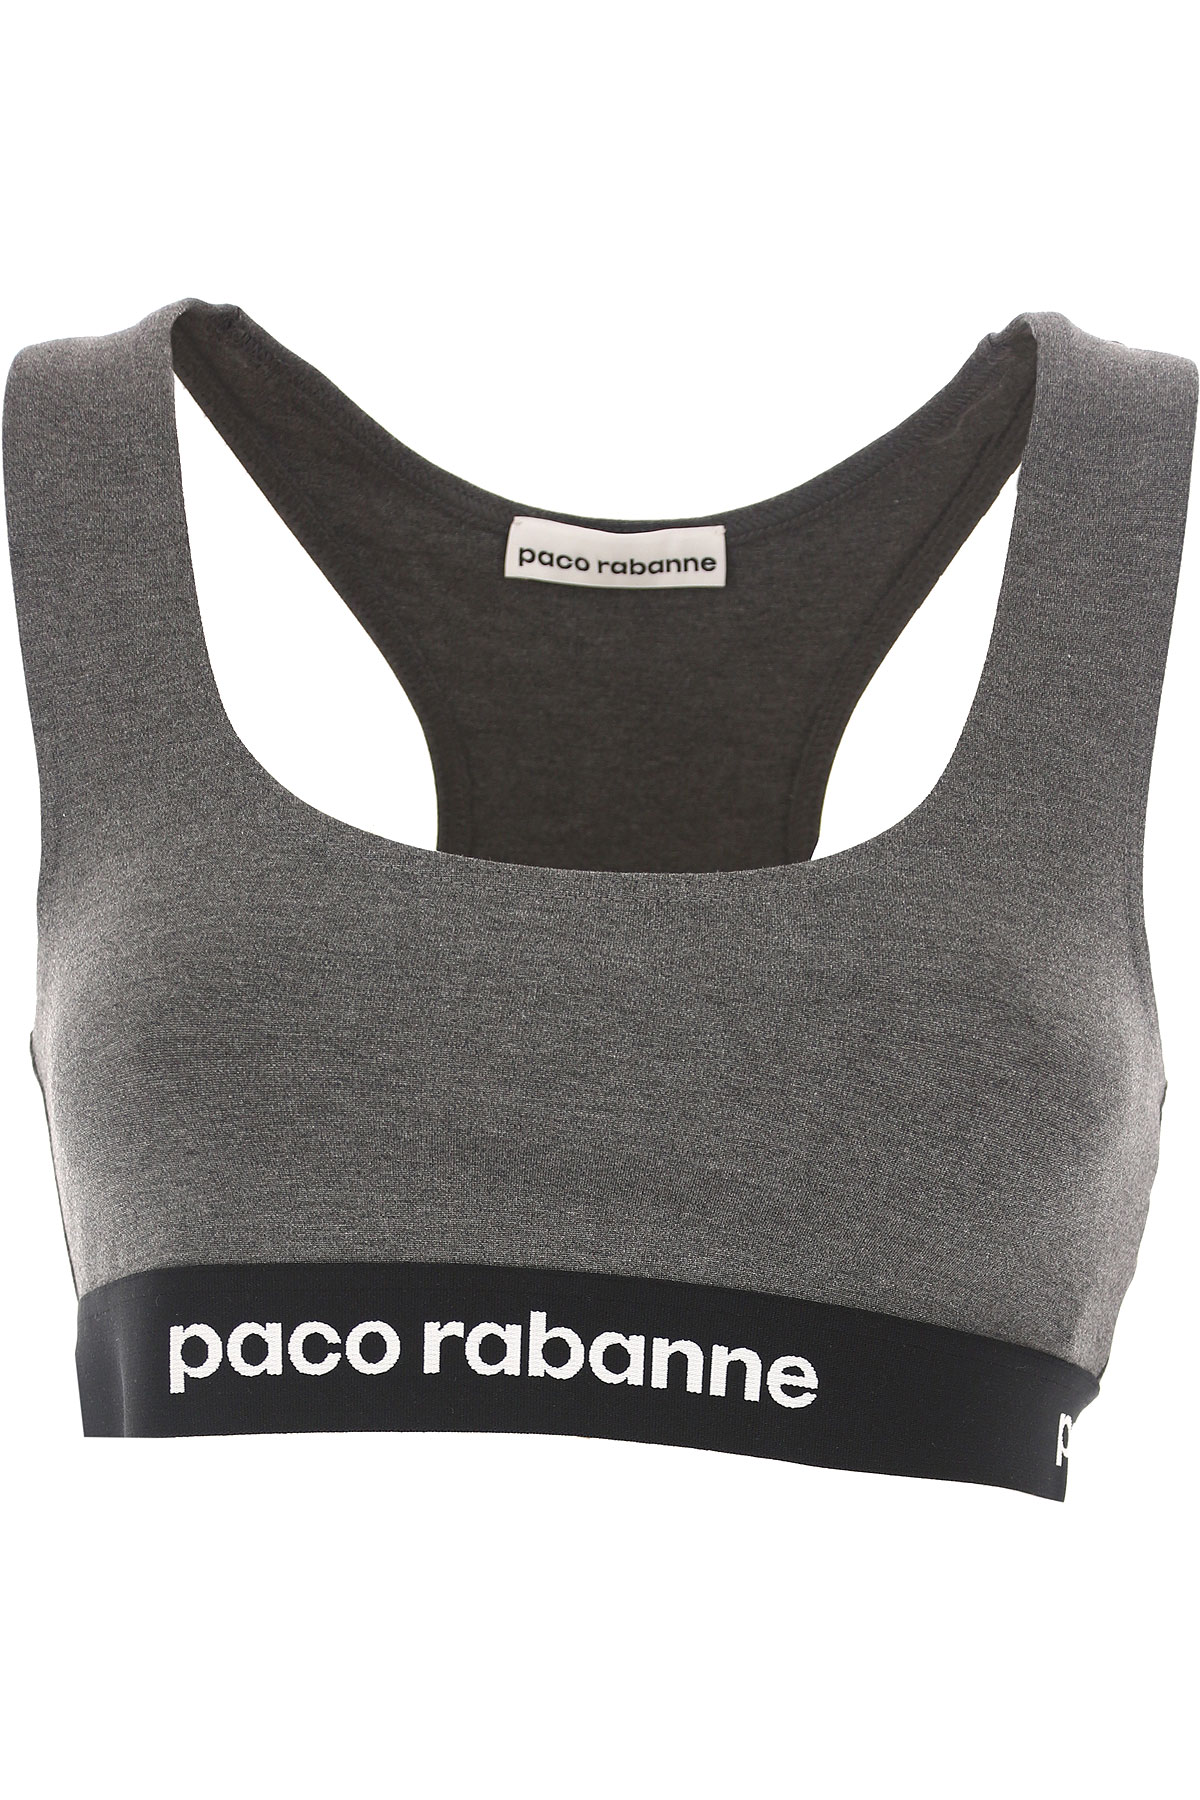 Womens Clothing Paco Rabanne, Style code: hjac001vi0001-033-